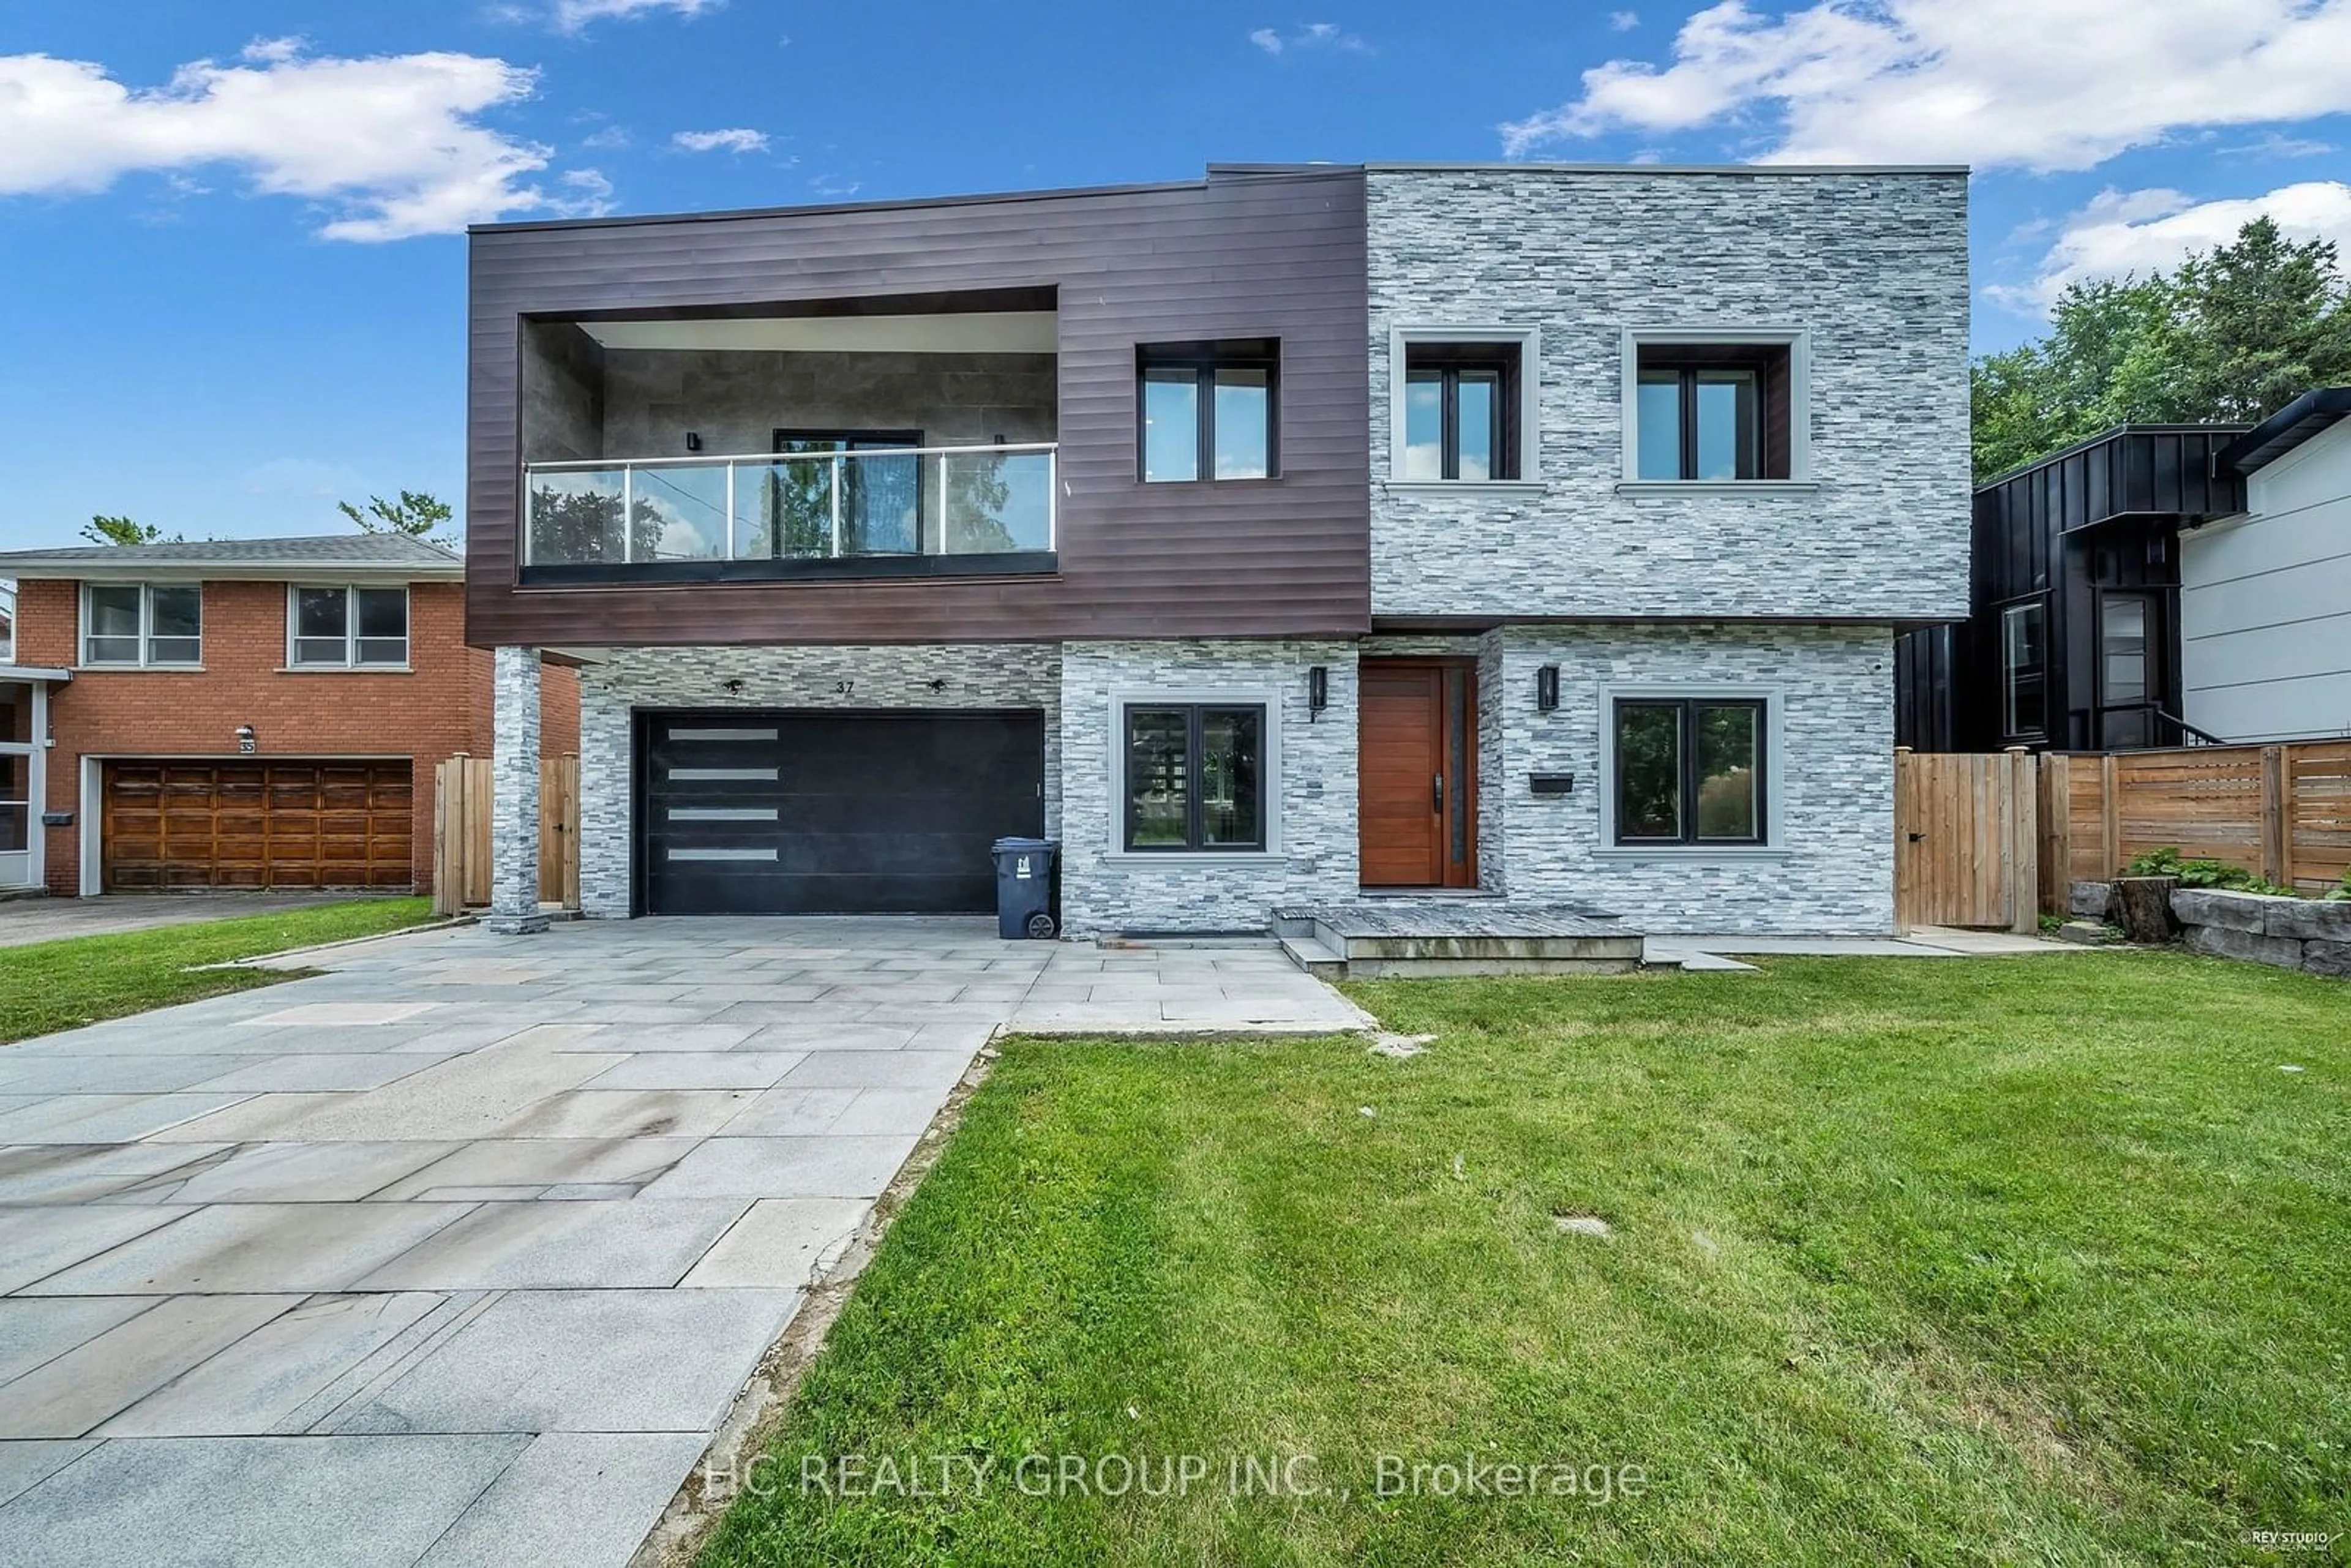 Home with brick exterior material for 37 Geraldton Cres, Toronto Ontario M2J 2R5